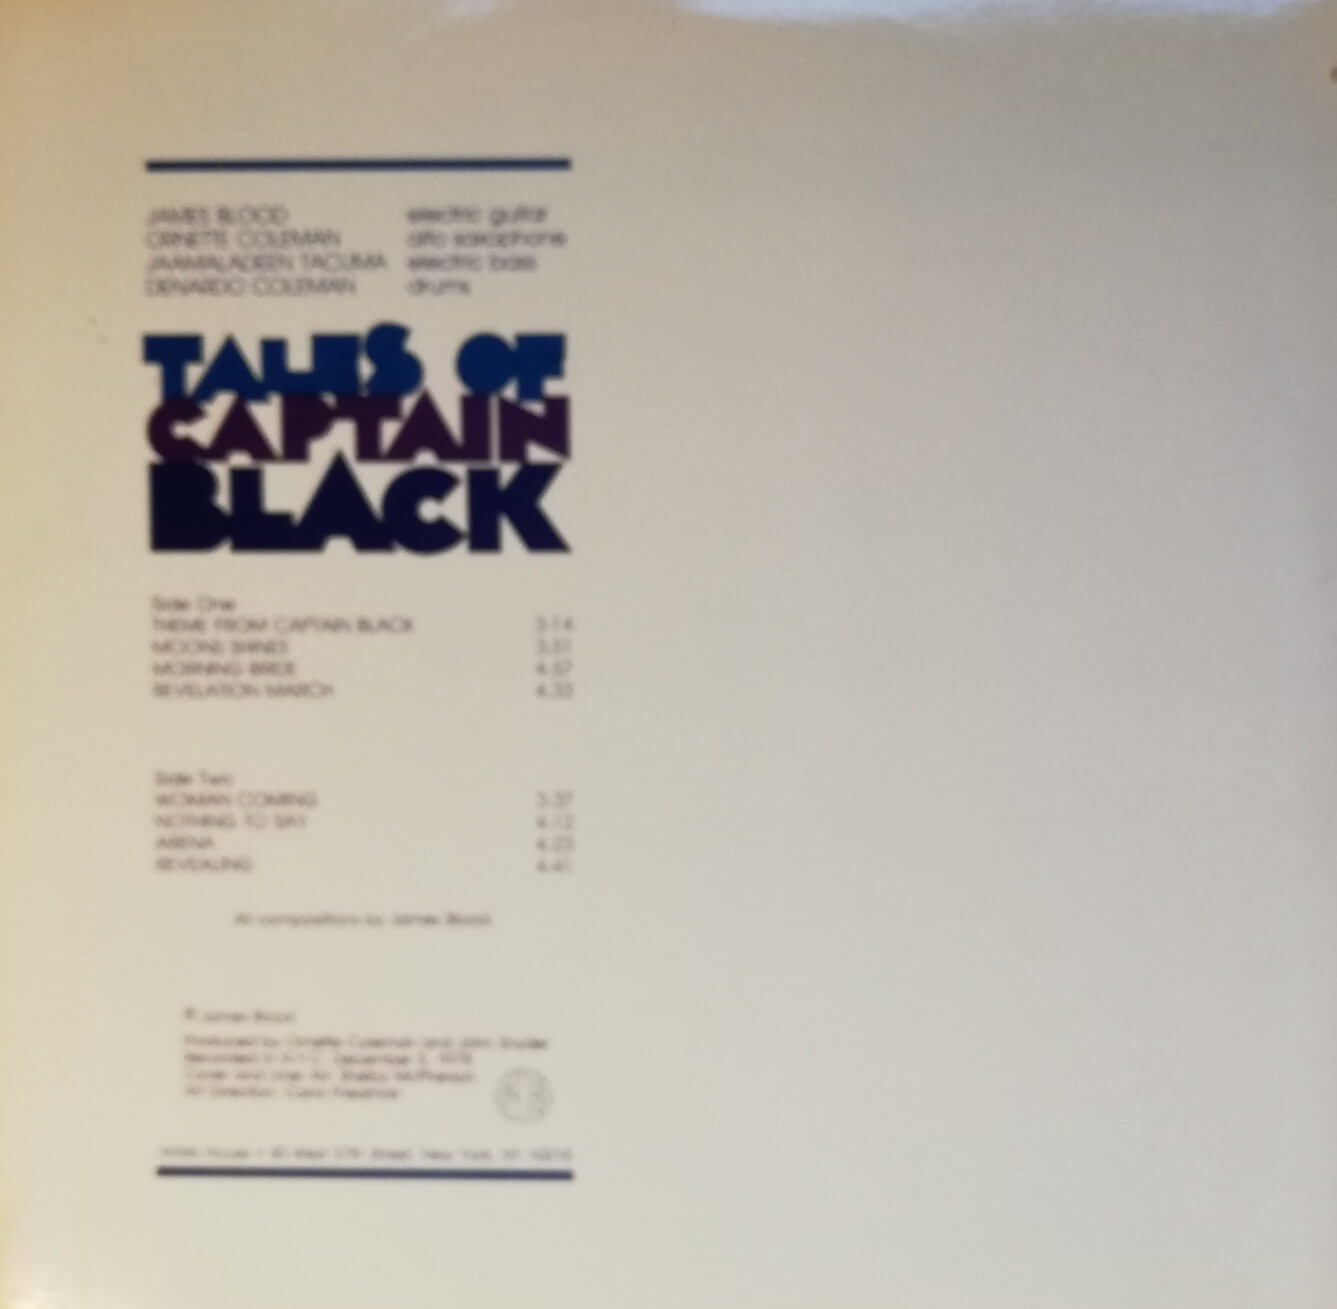 Okładka płyty winylowej artysty James Blood Ulmer o tytule Tales Of Captain Black